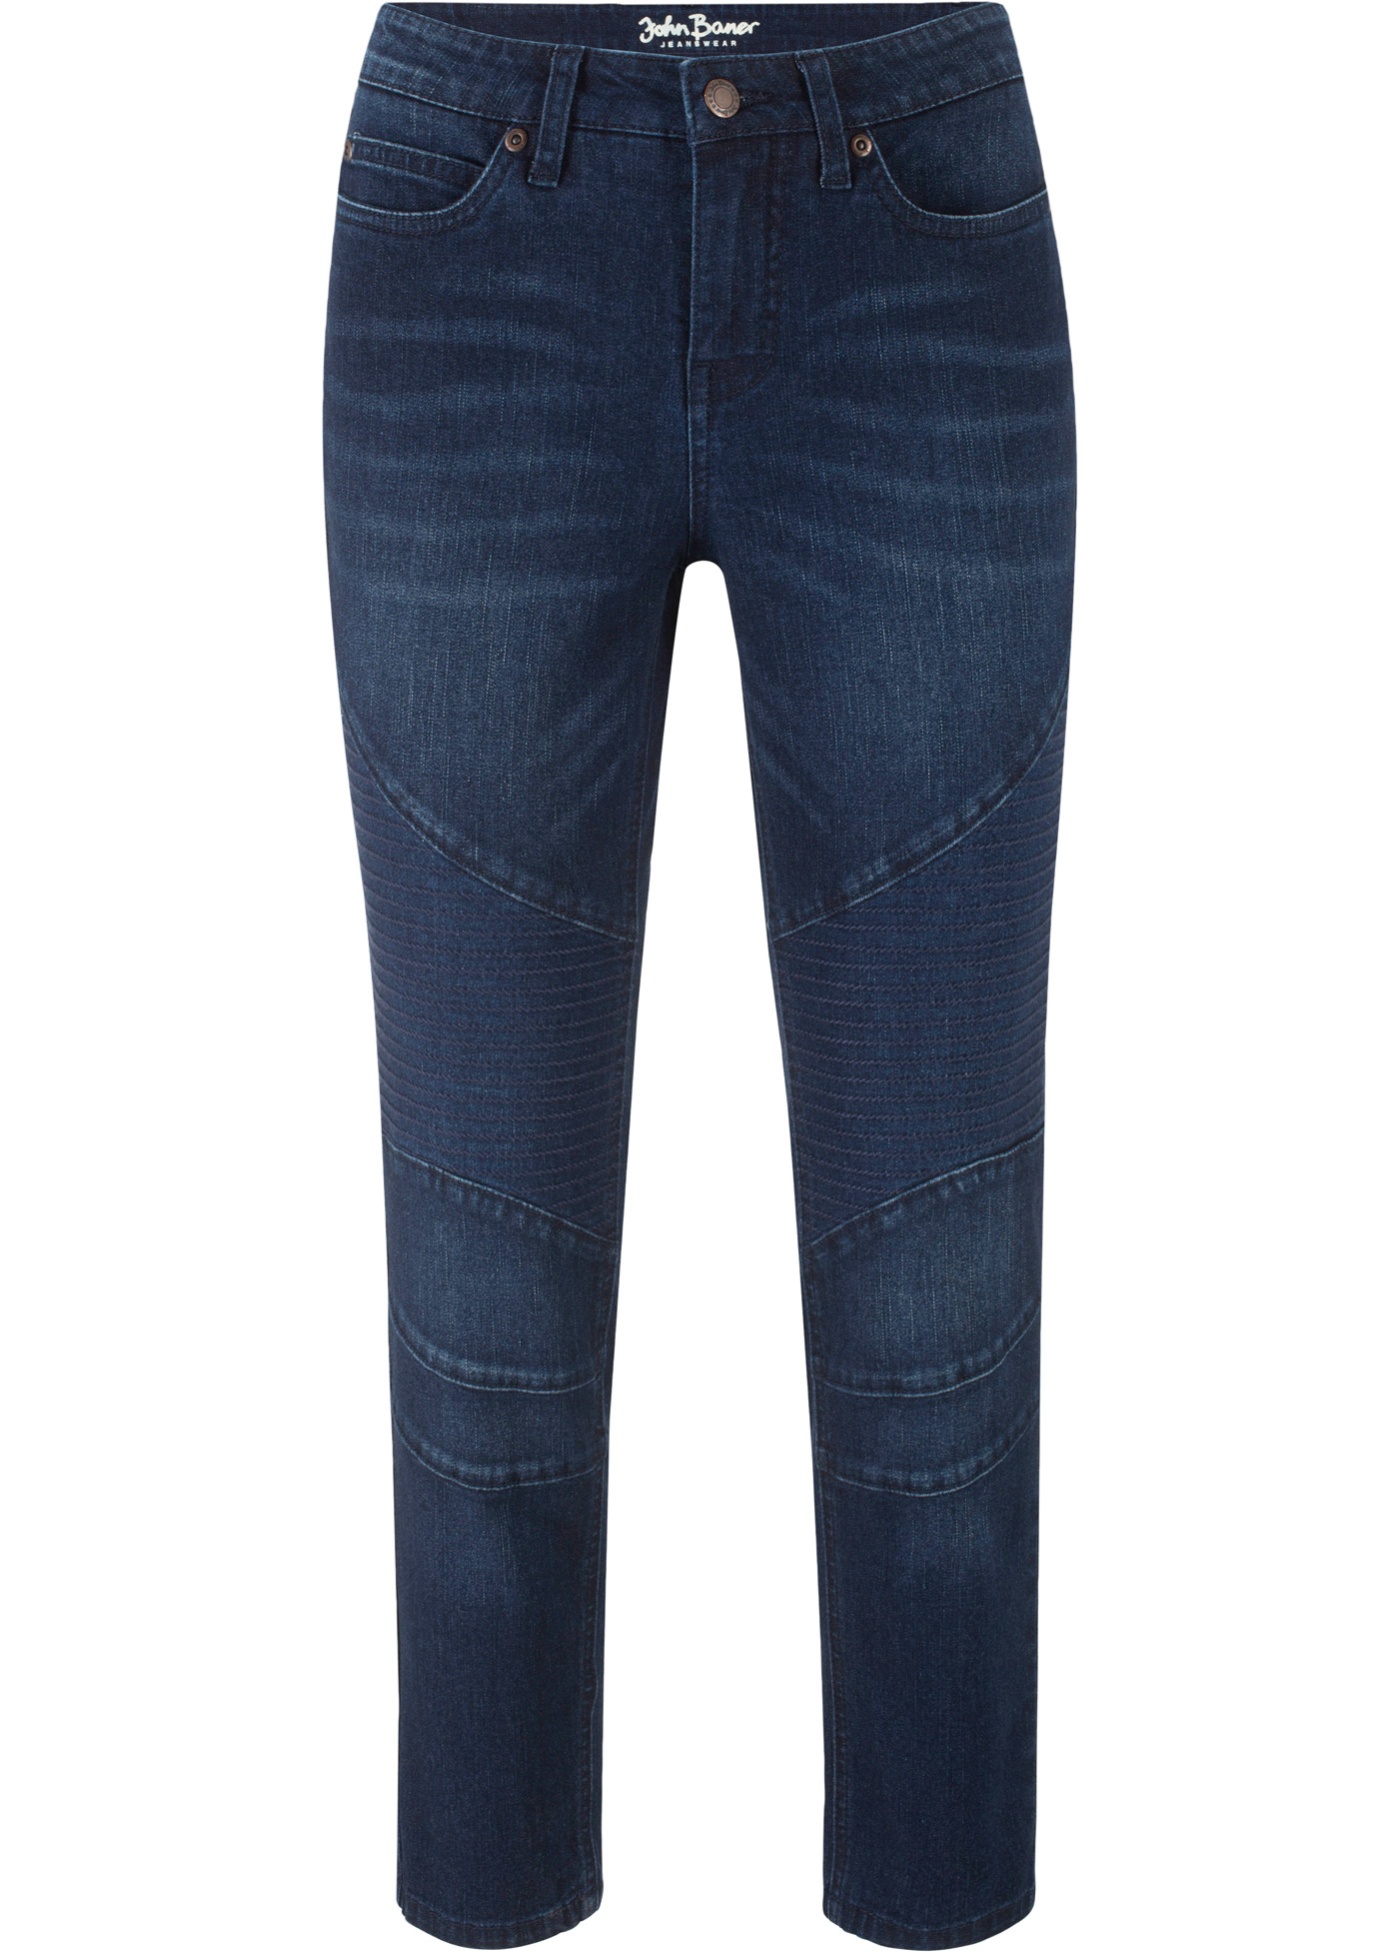 Bonprix - Biker jeans 249.00